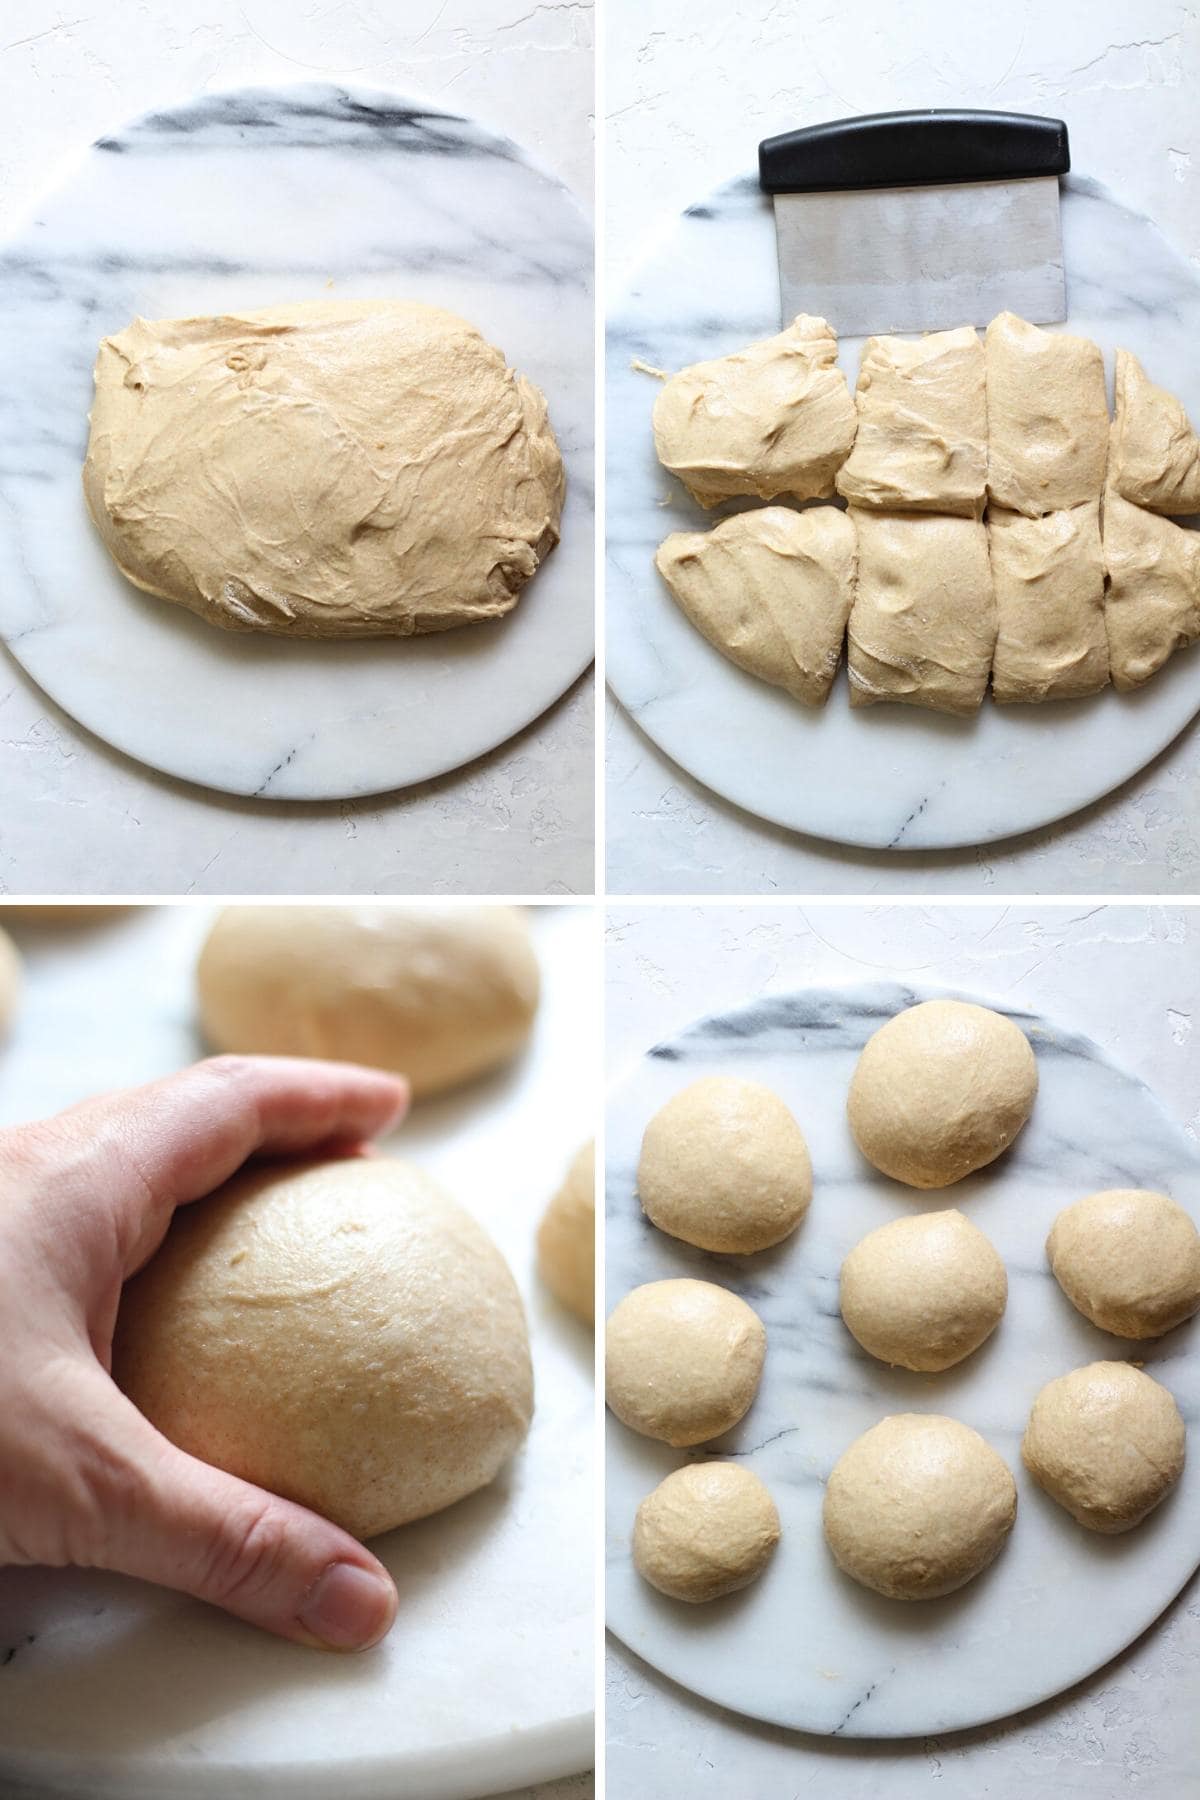 How to shape Sourdough hamburger buns